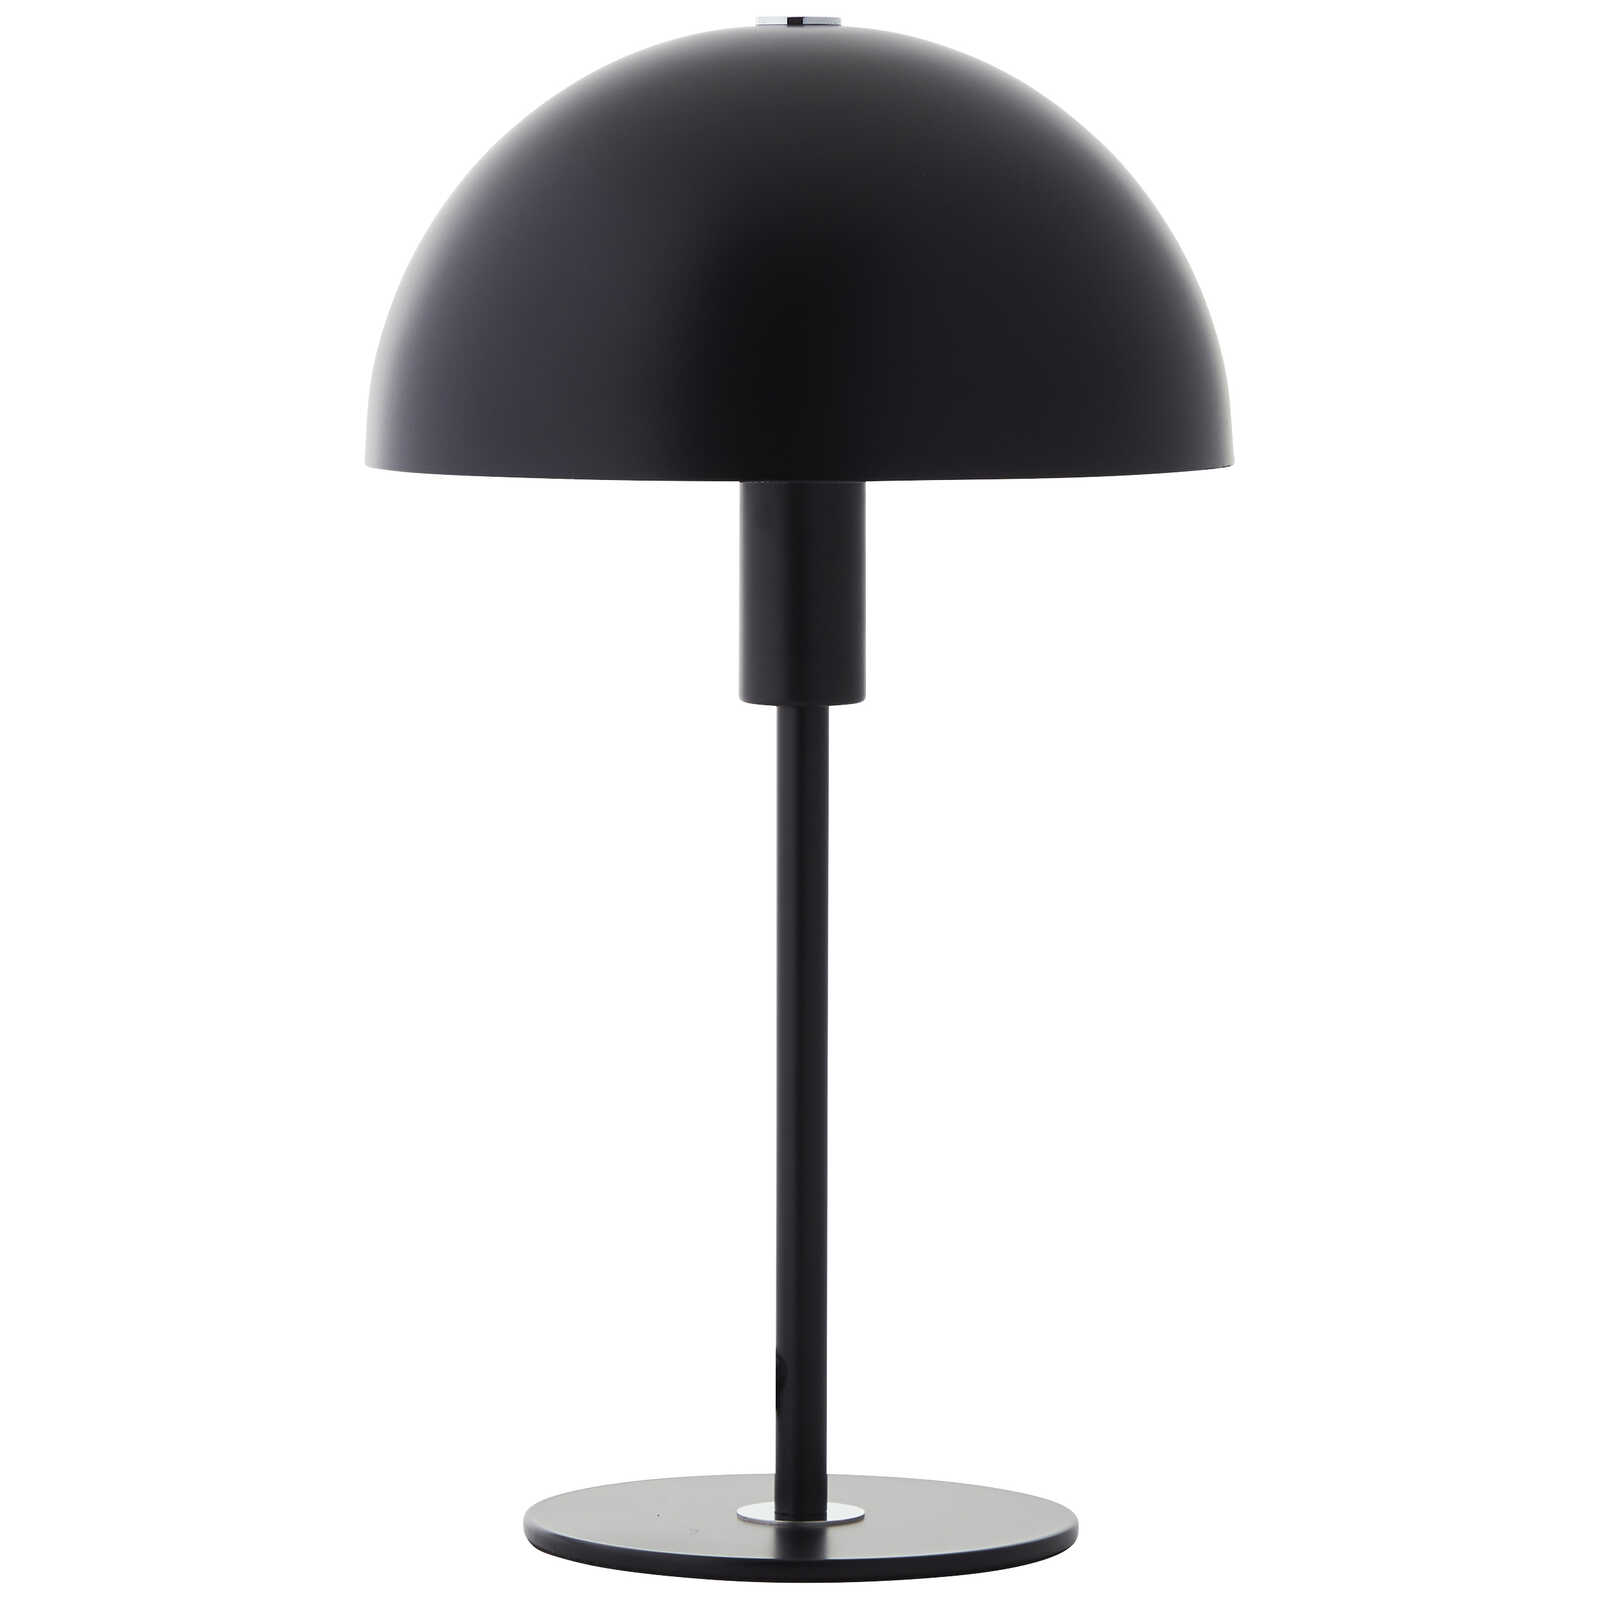             Lampe de table en métal - Lasse 4 - Noir
        